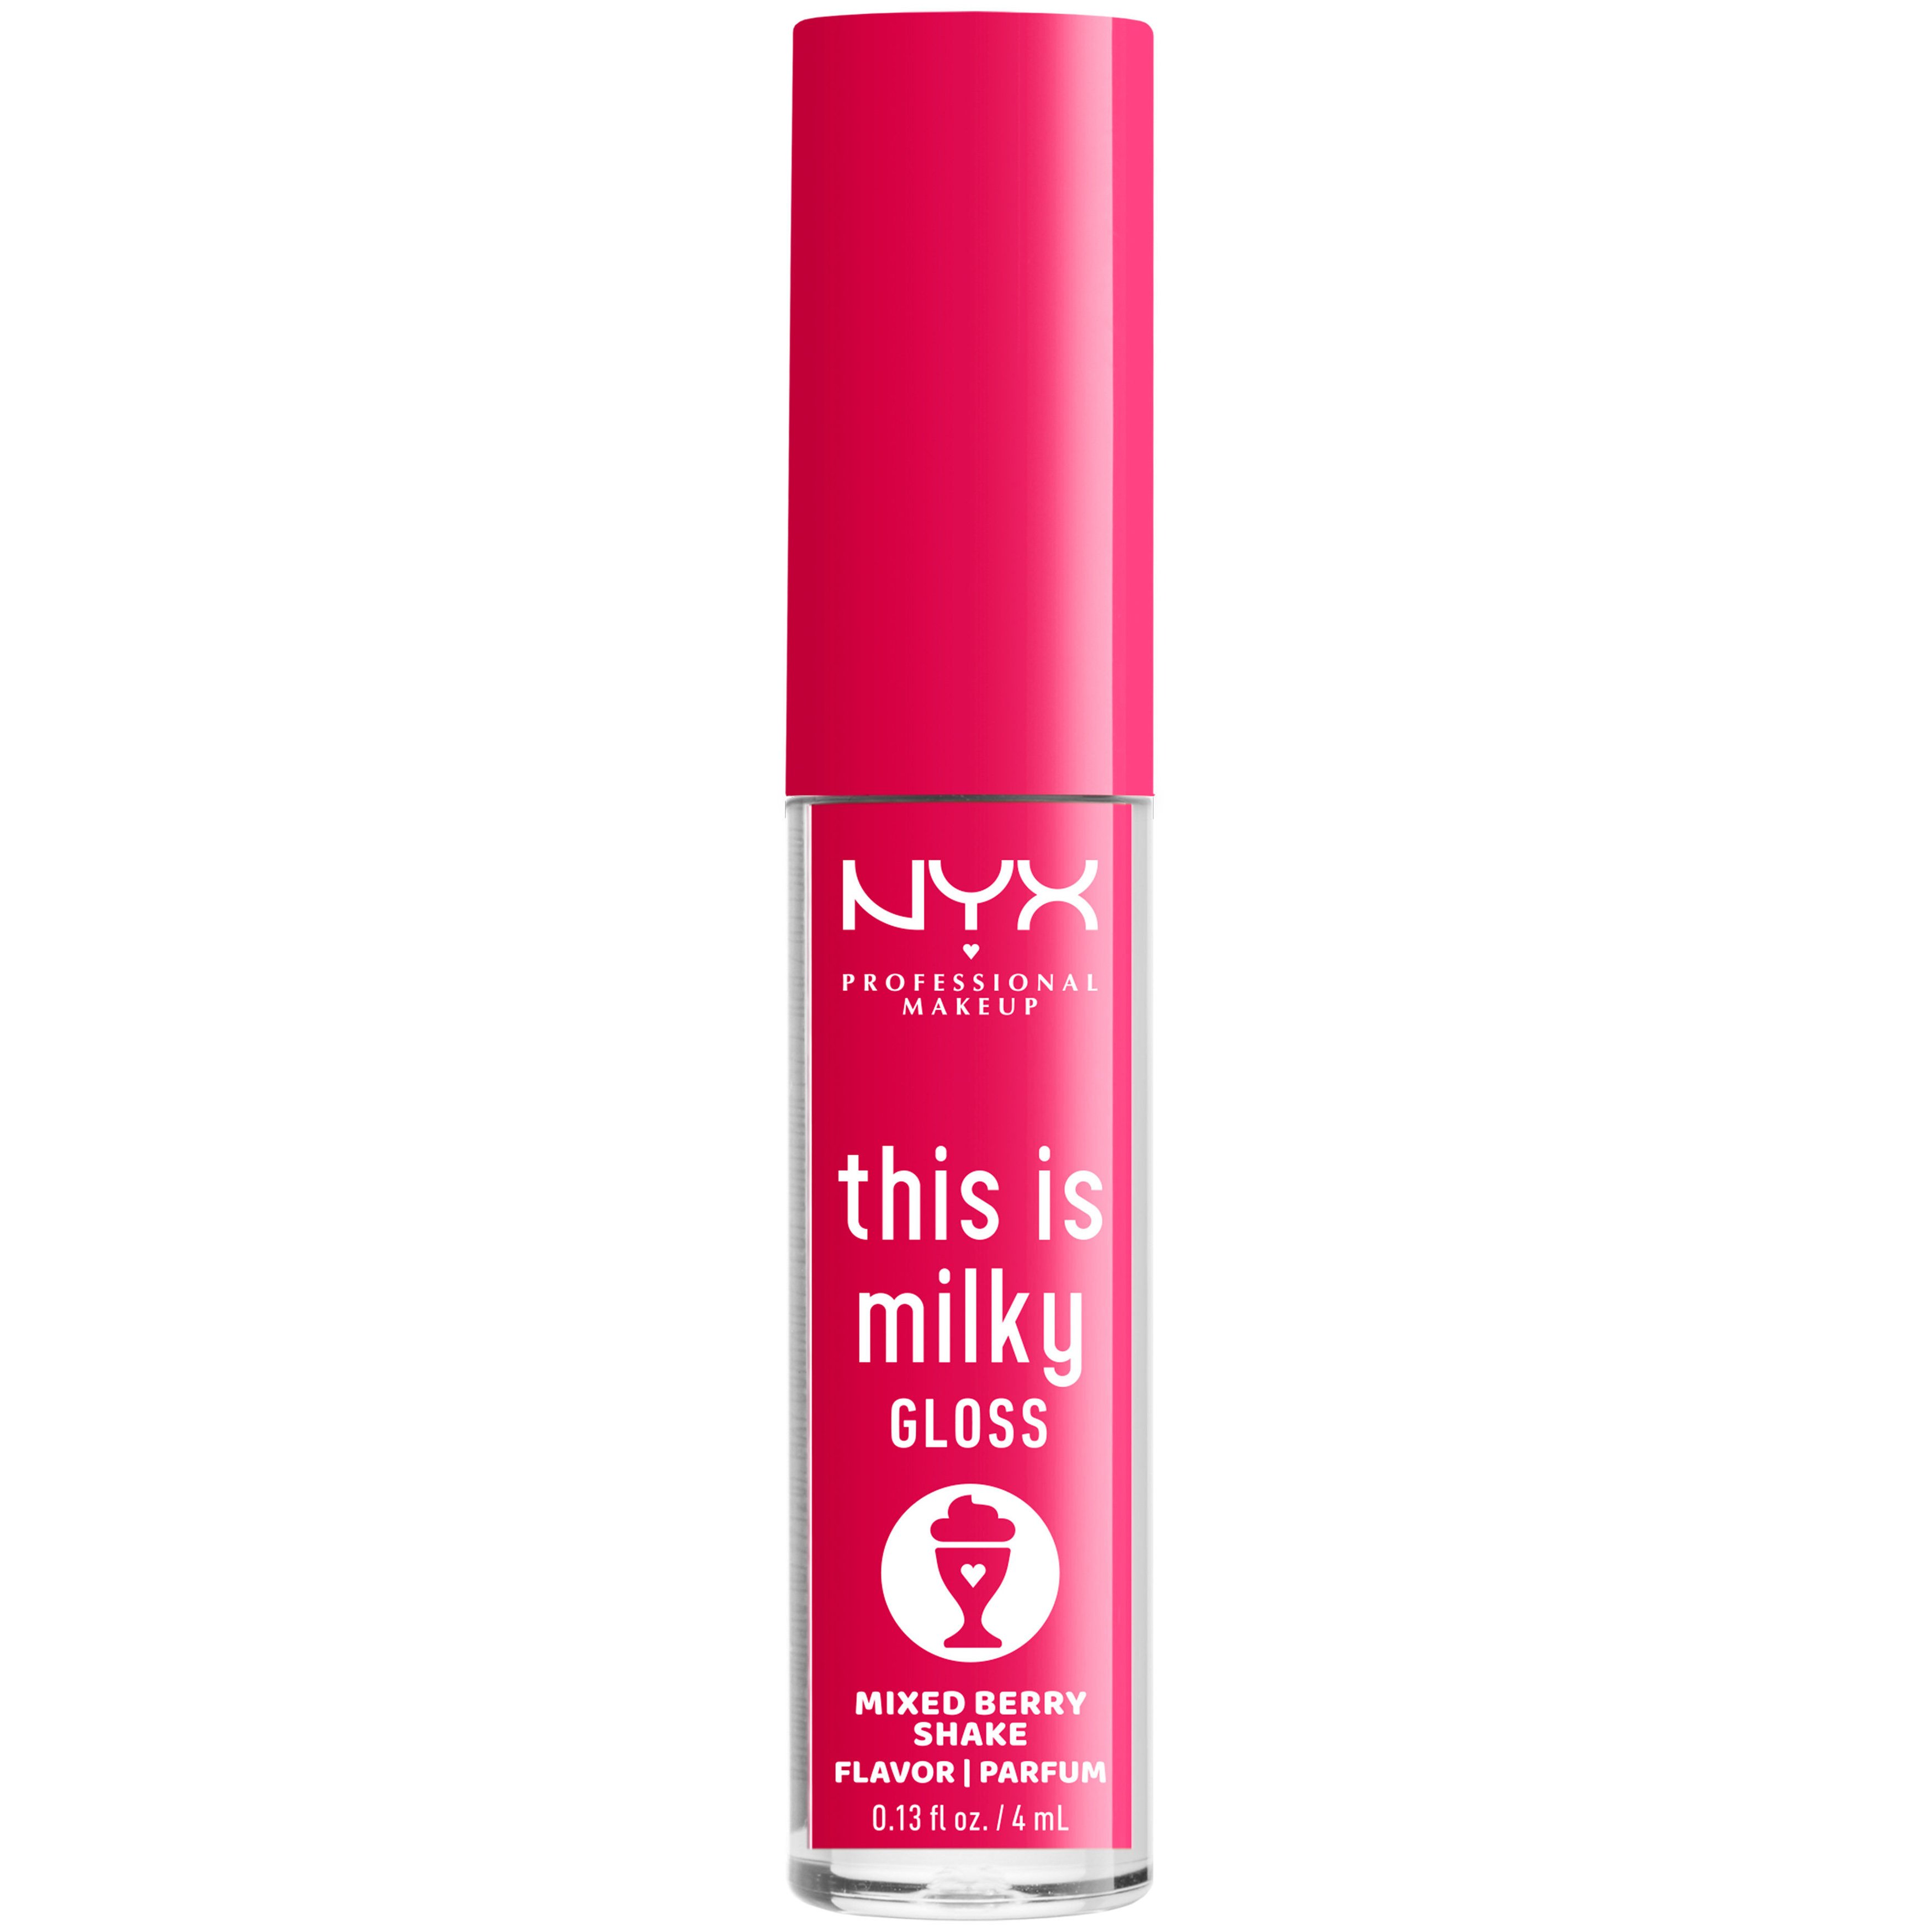 Nyx This Is Milky Lip Gloss Milkshake Flavor Lip Gloss με Κρεμώδη Υφή & Έντονη Λάμψη με Γεύση Milkshake 4ml – Mixed Berry Shake